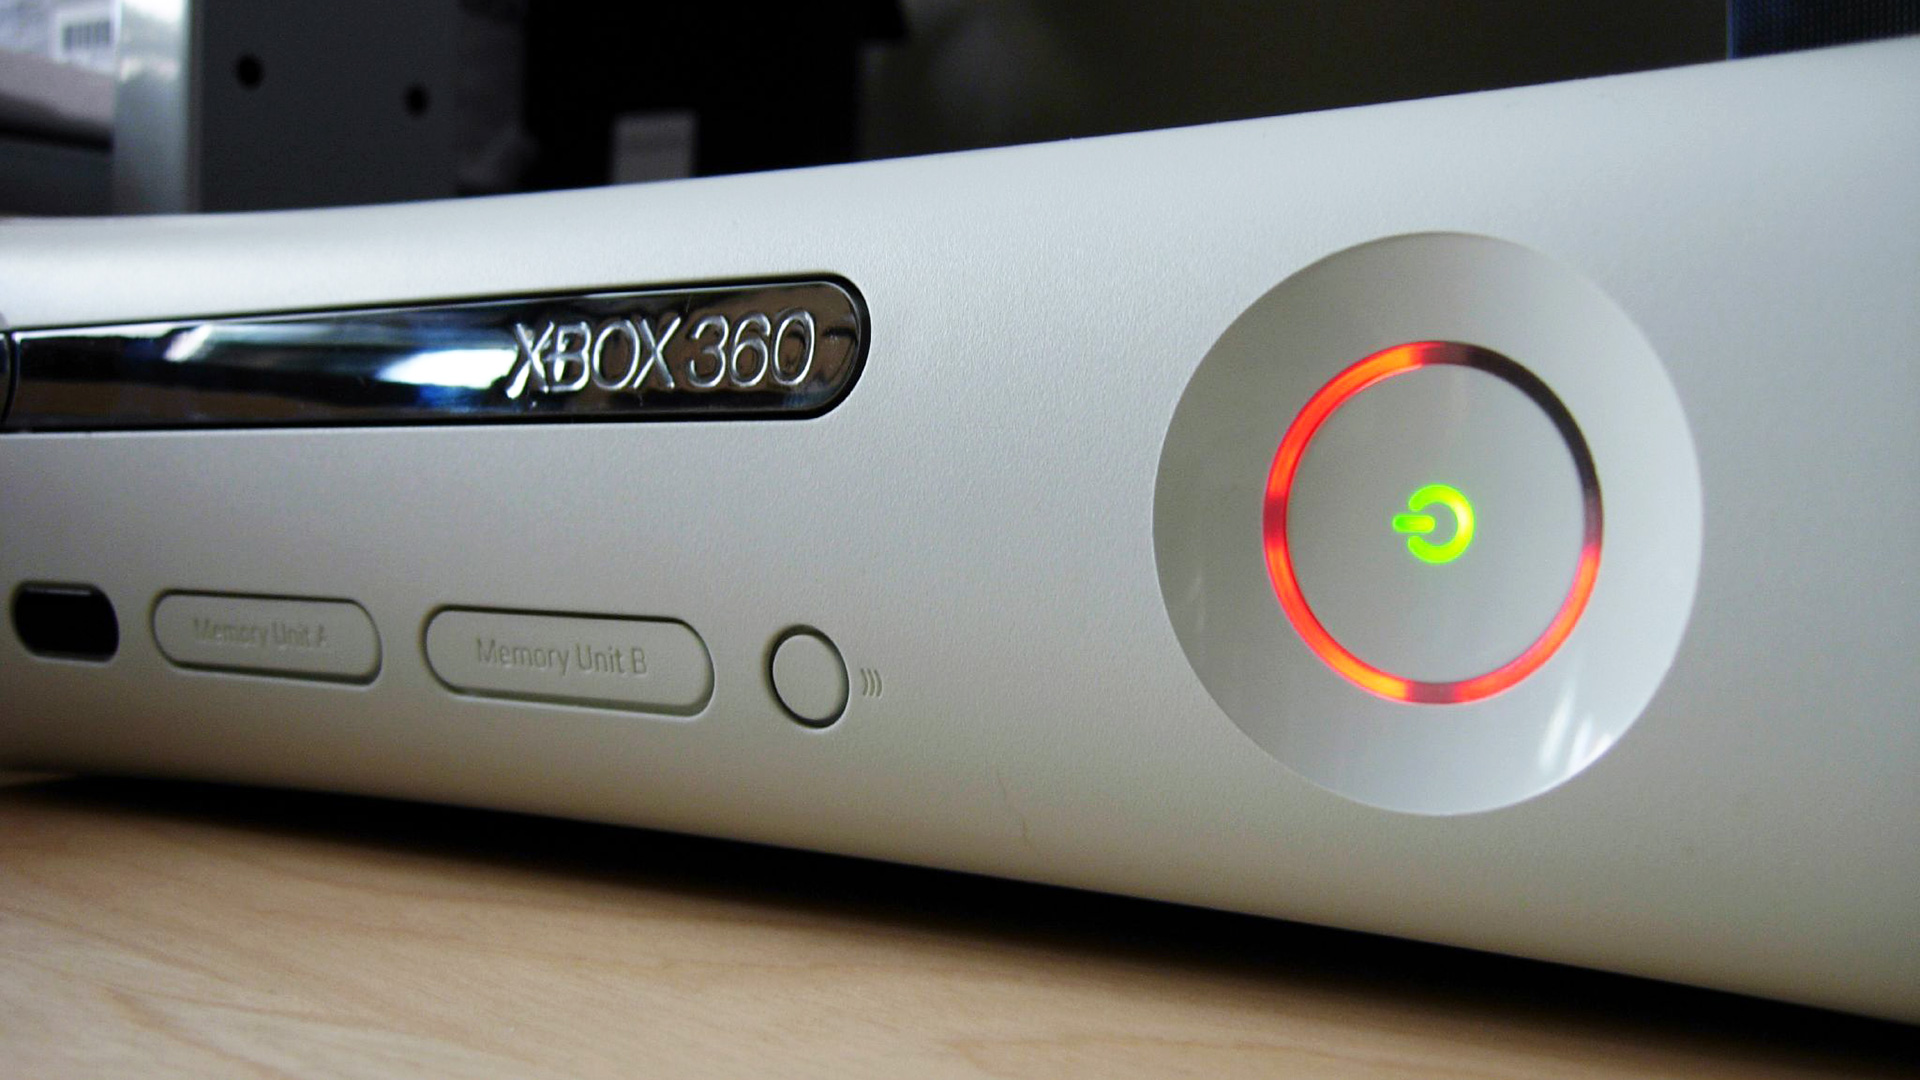 Xbox 360 server rumor, not true